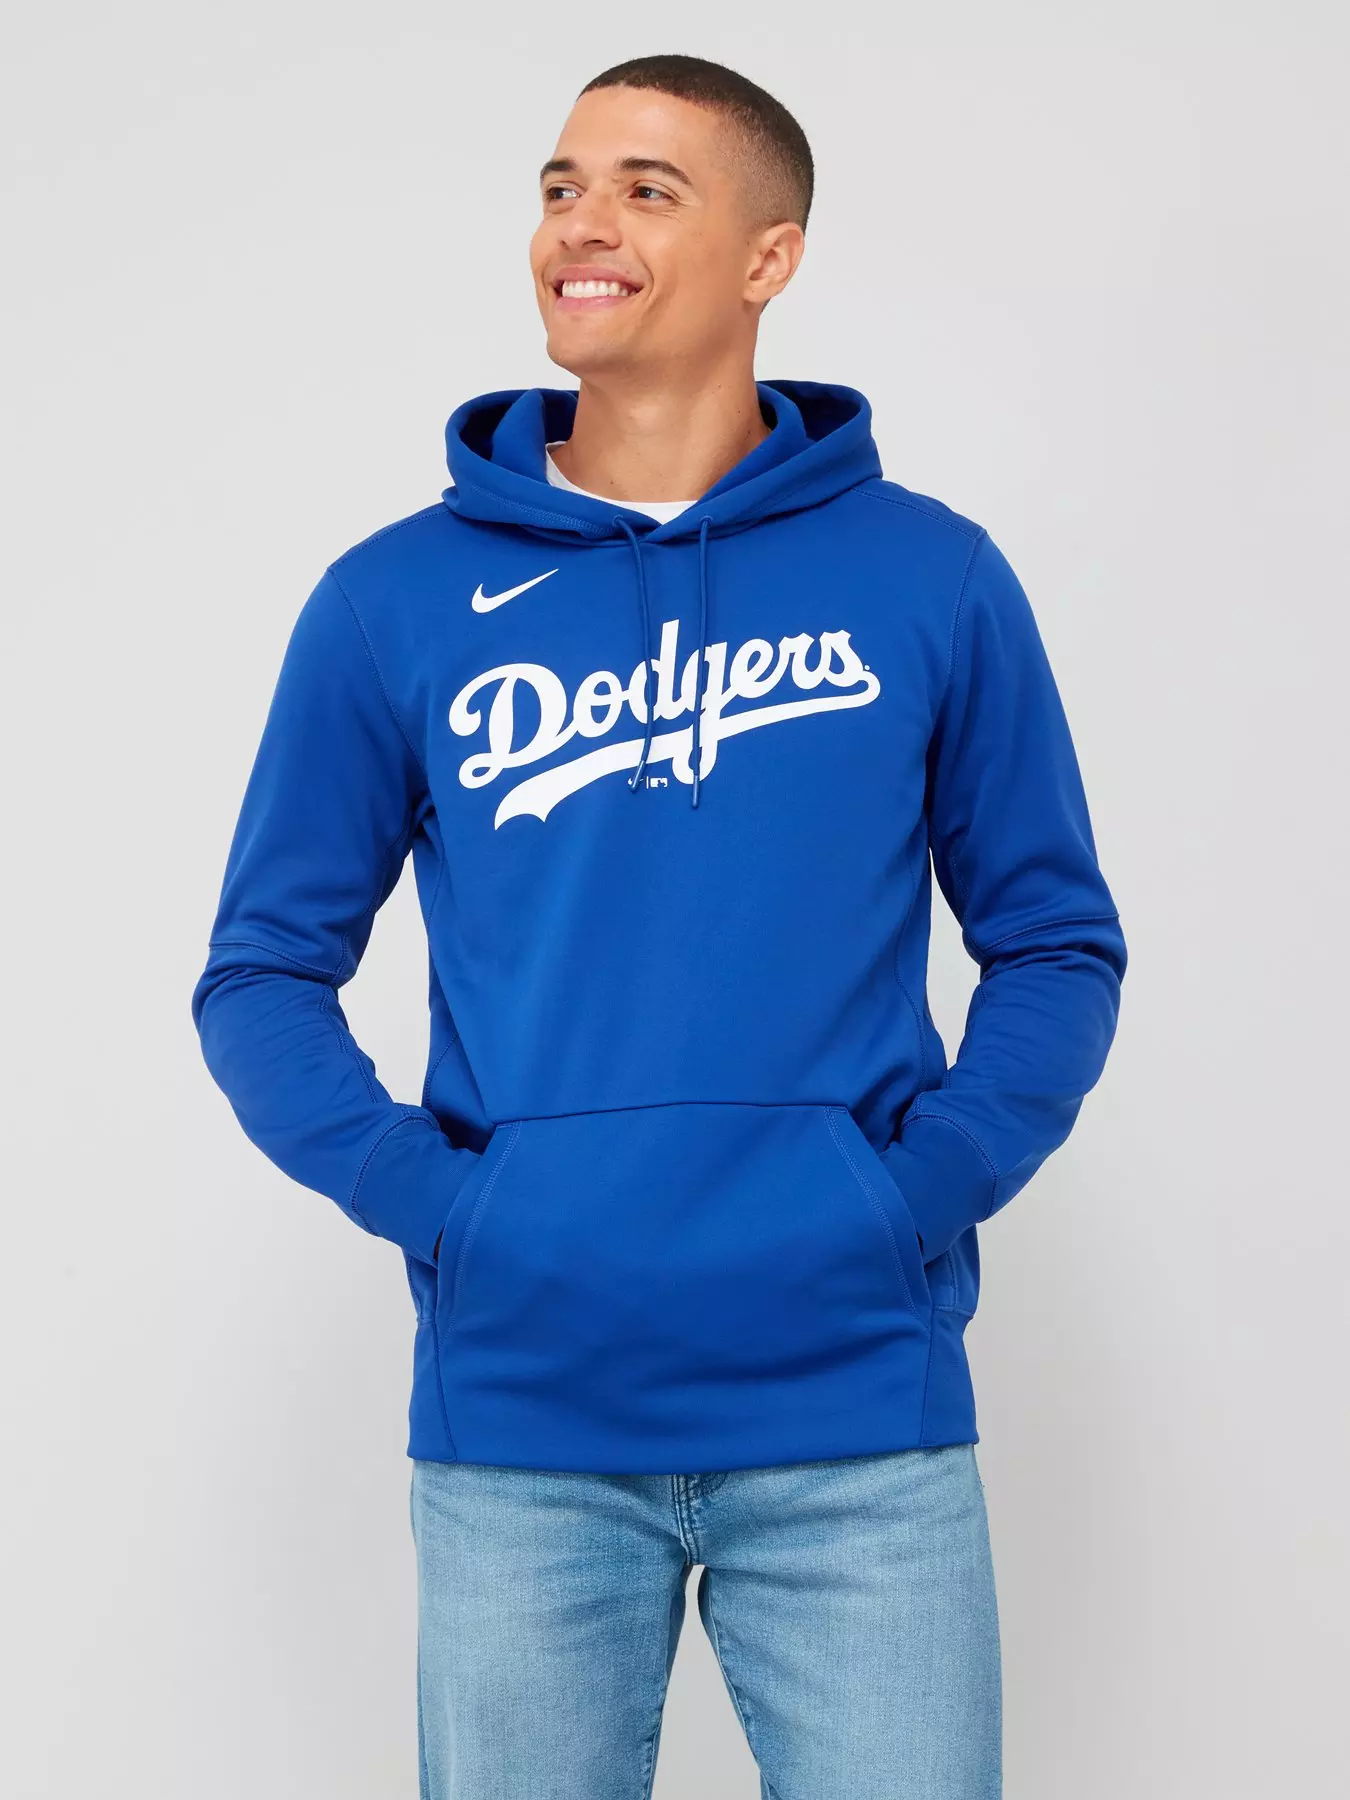 New Nike LA Dodgers Gray/Blue Authentic Therma Hooded Sweatshirt Sz 2XL NWT